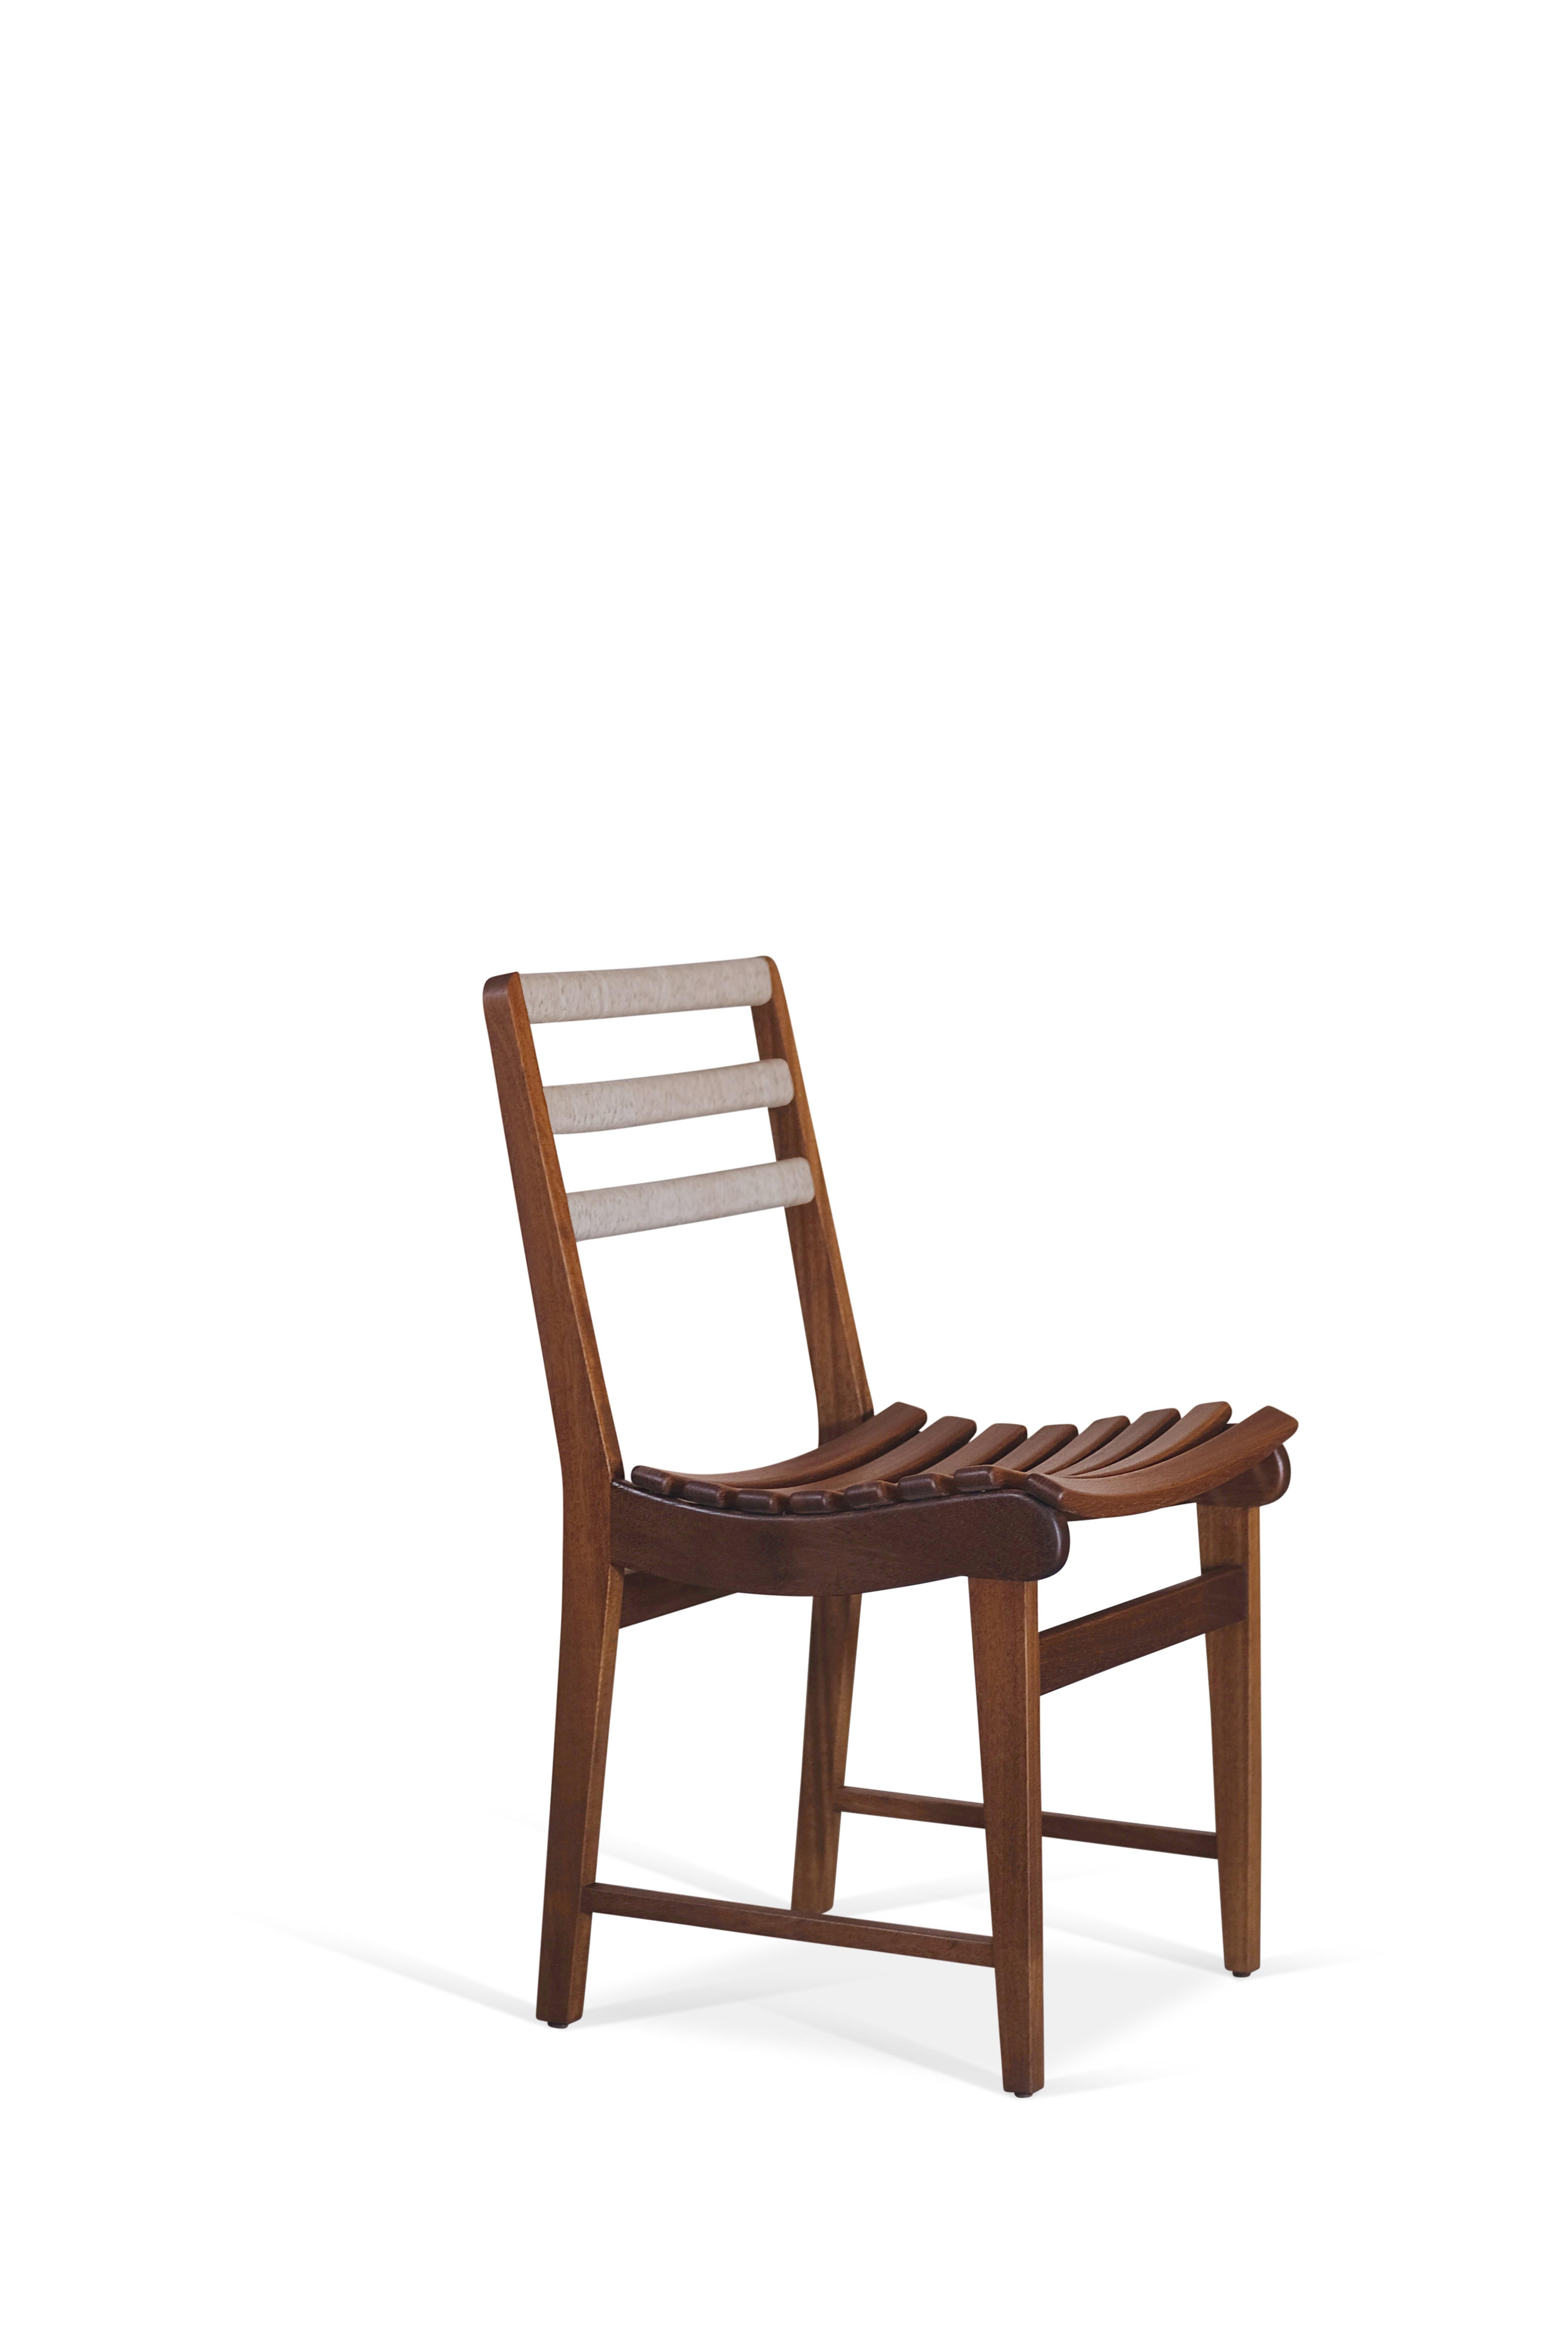 Luteca Furniture Chairs